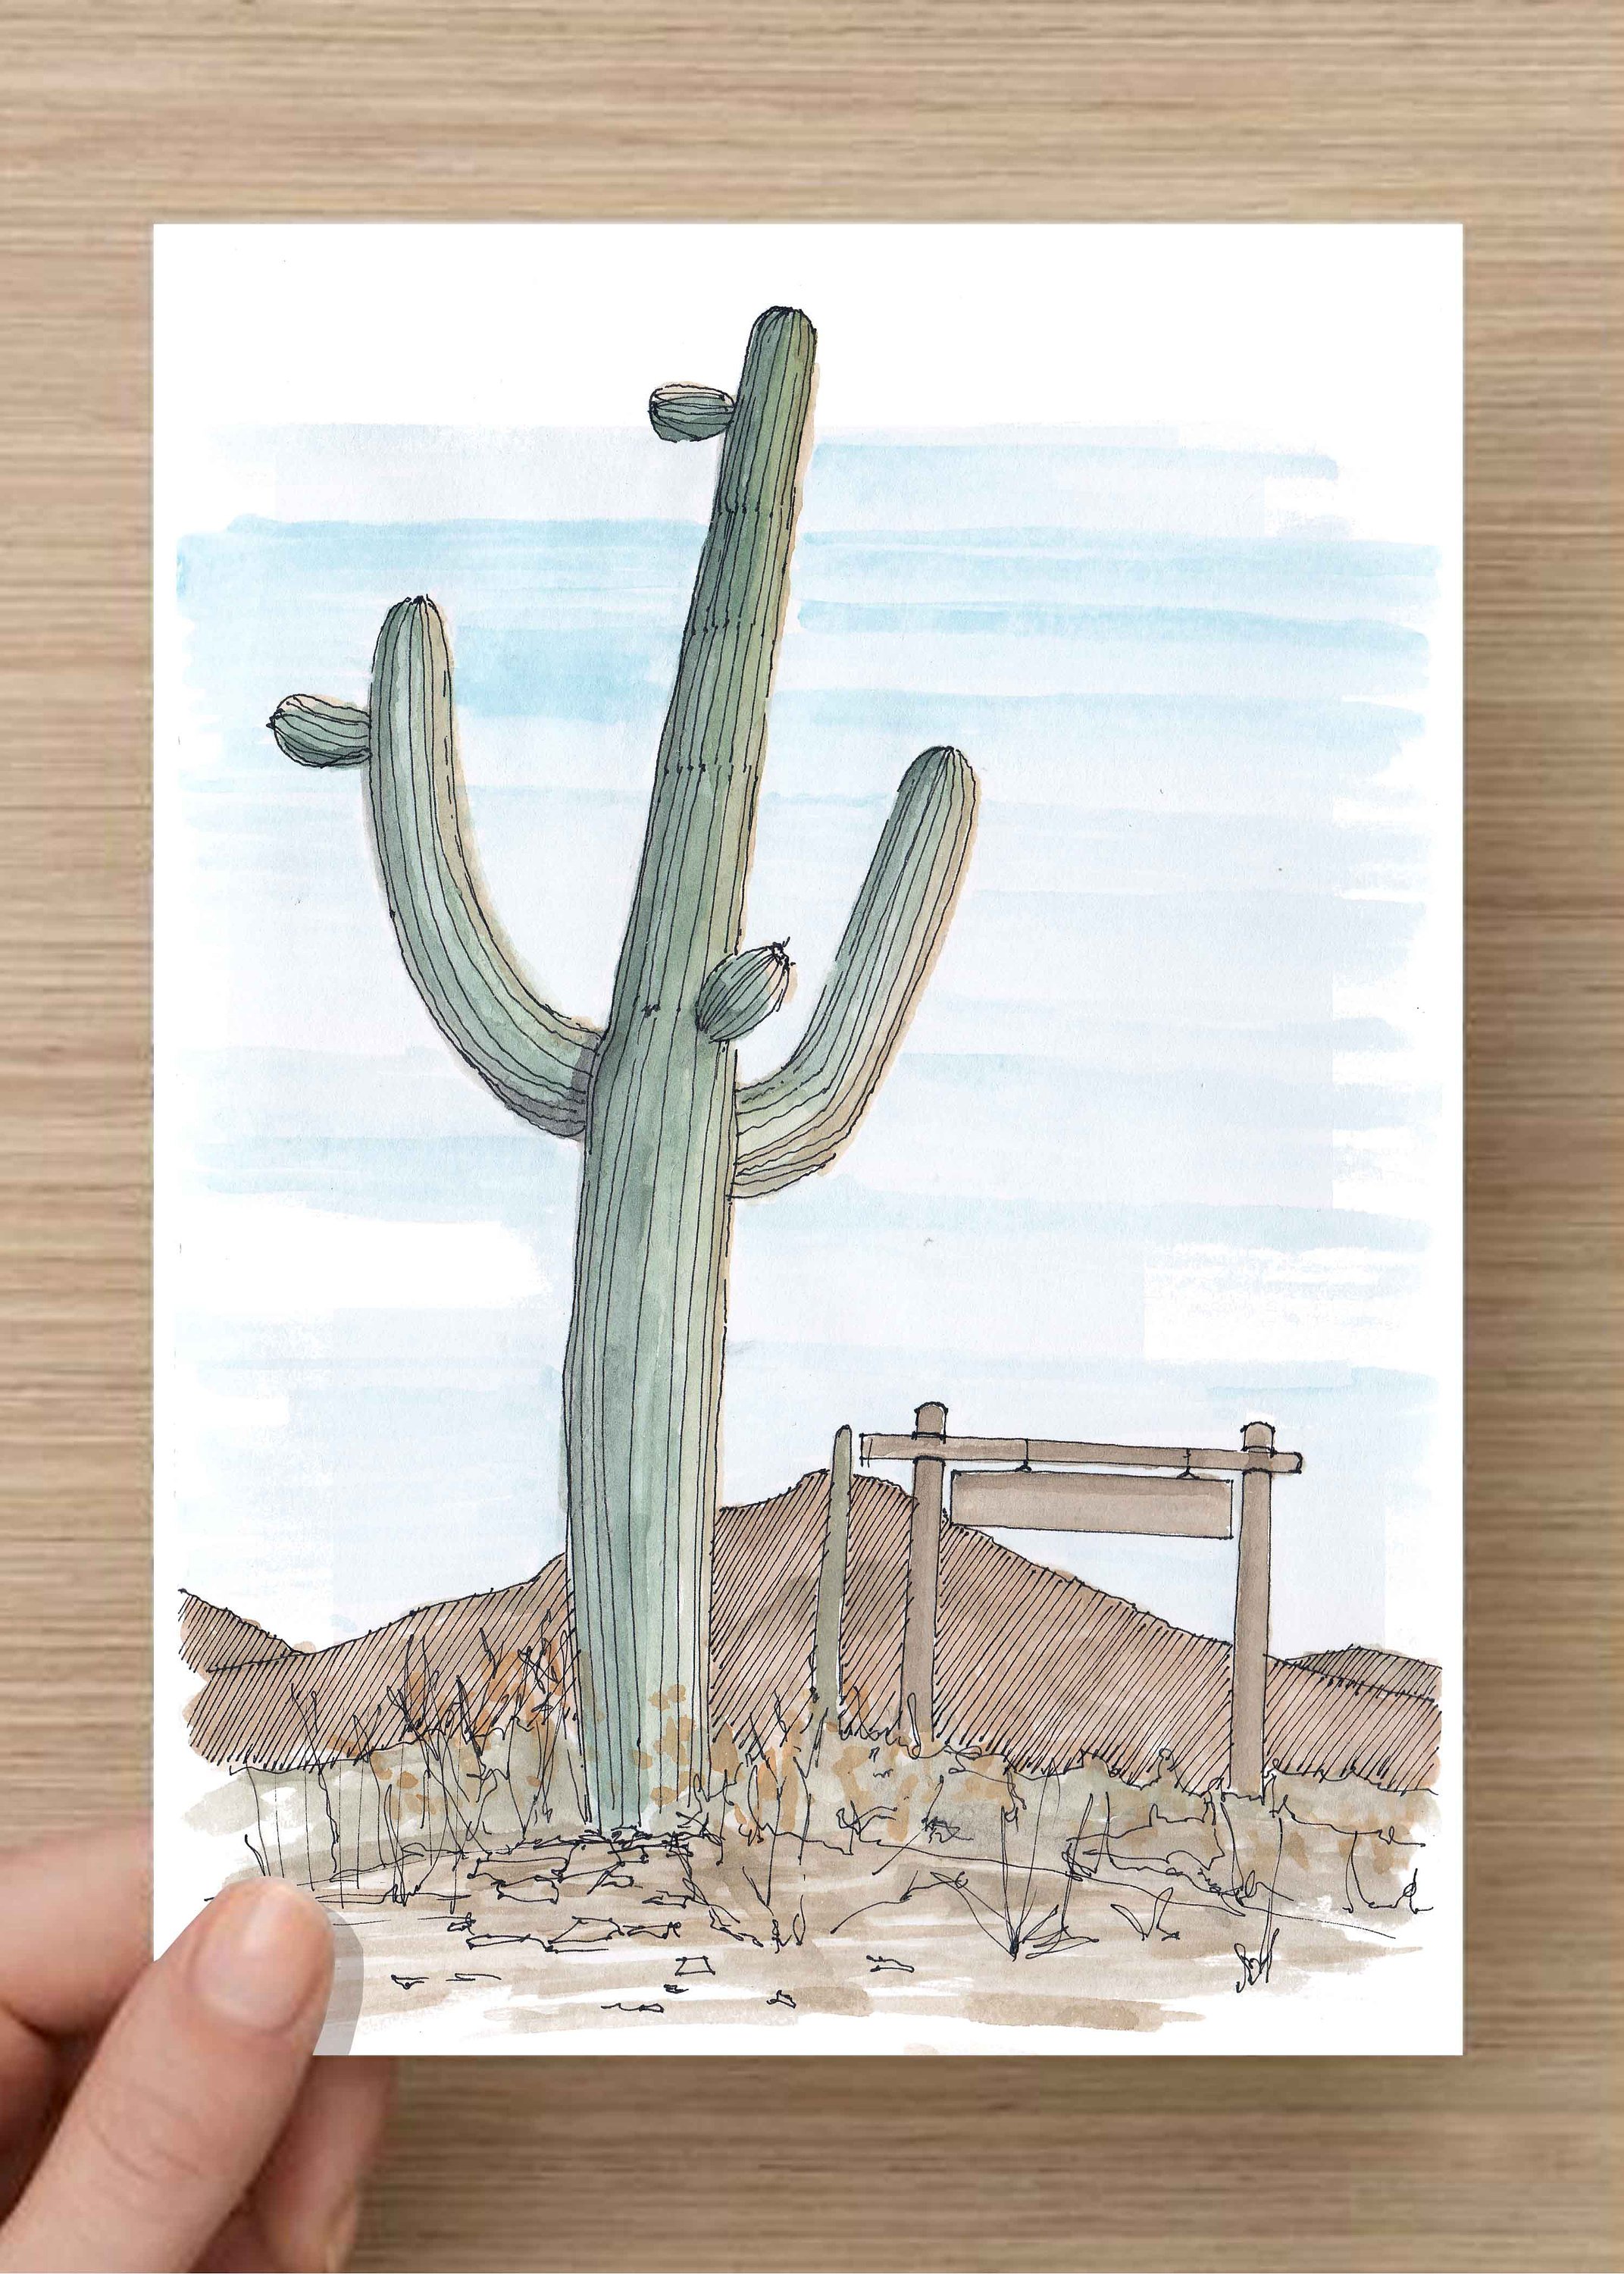 Saguaro Drawing at Explore collection of Saguaro